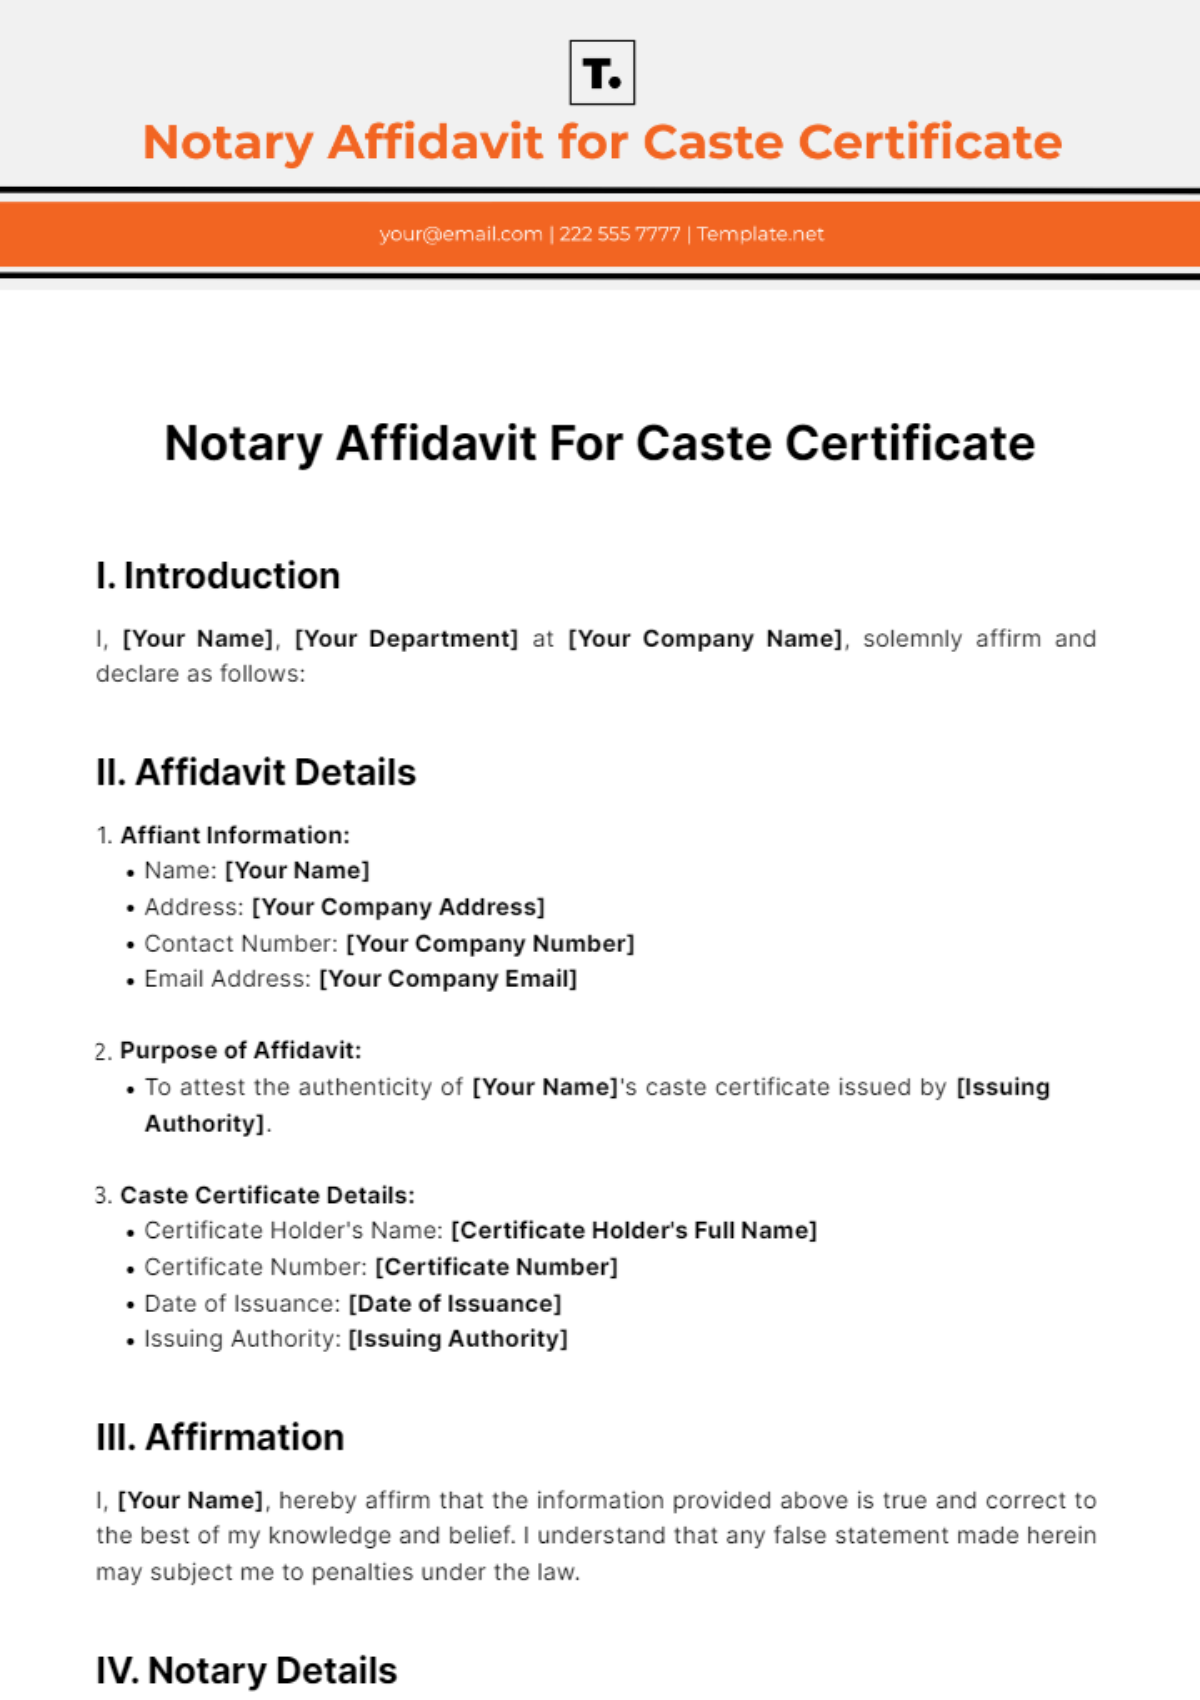 Notary Affidavit For Caste Certificate Template